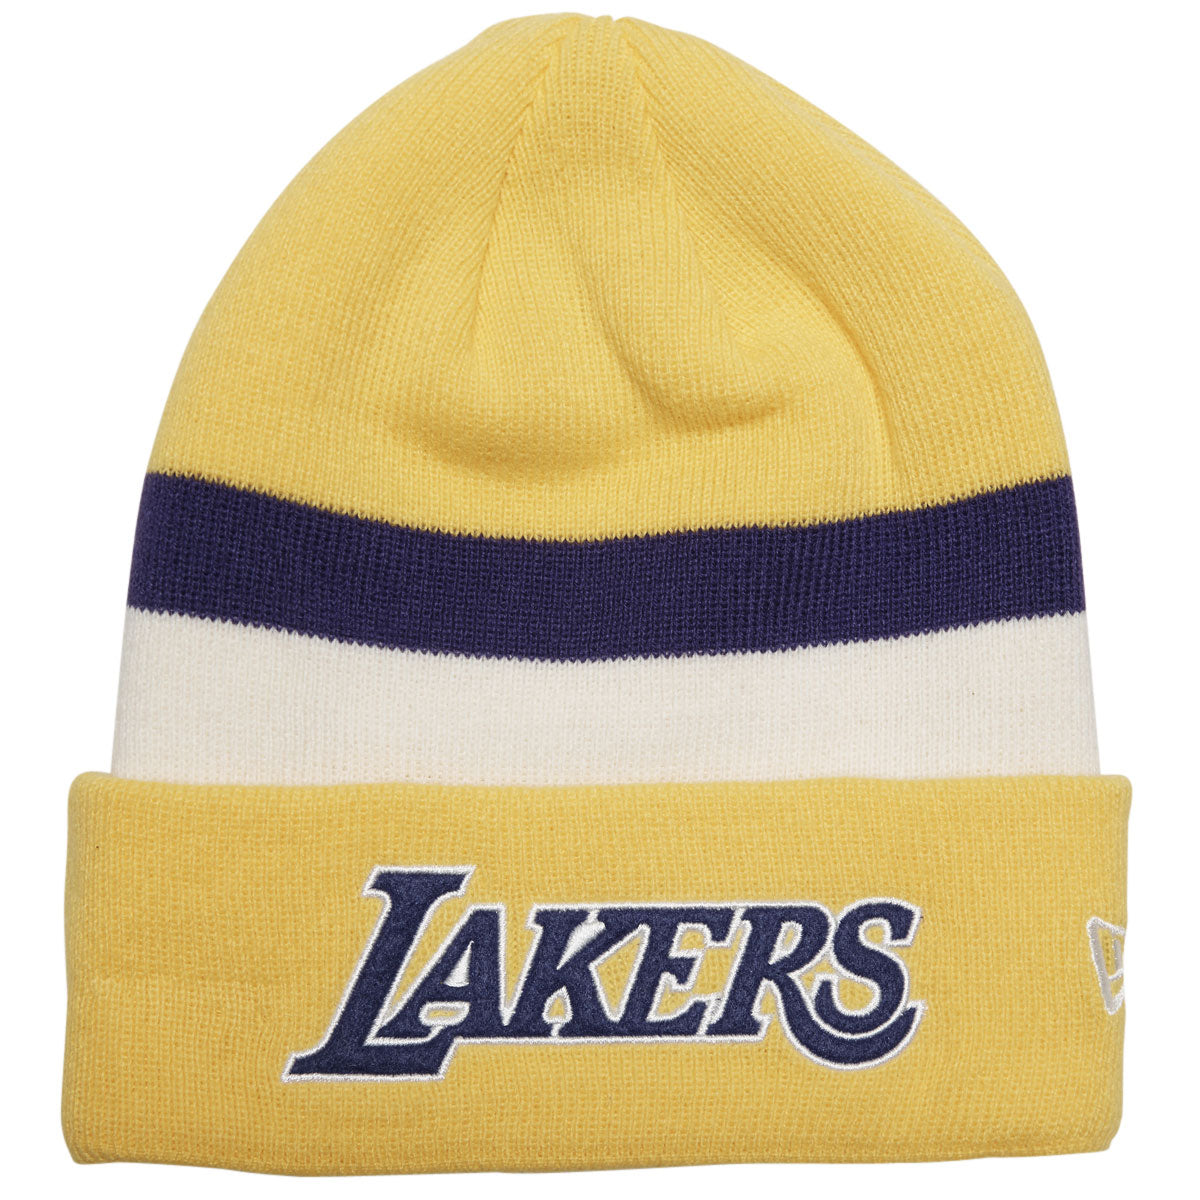 New Era Knit Medium Retro Cuff Knit Beanie - Los Angeles Lakers image 1